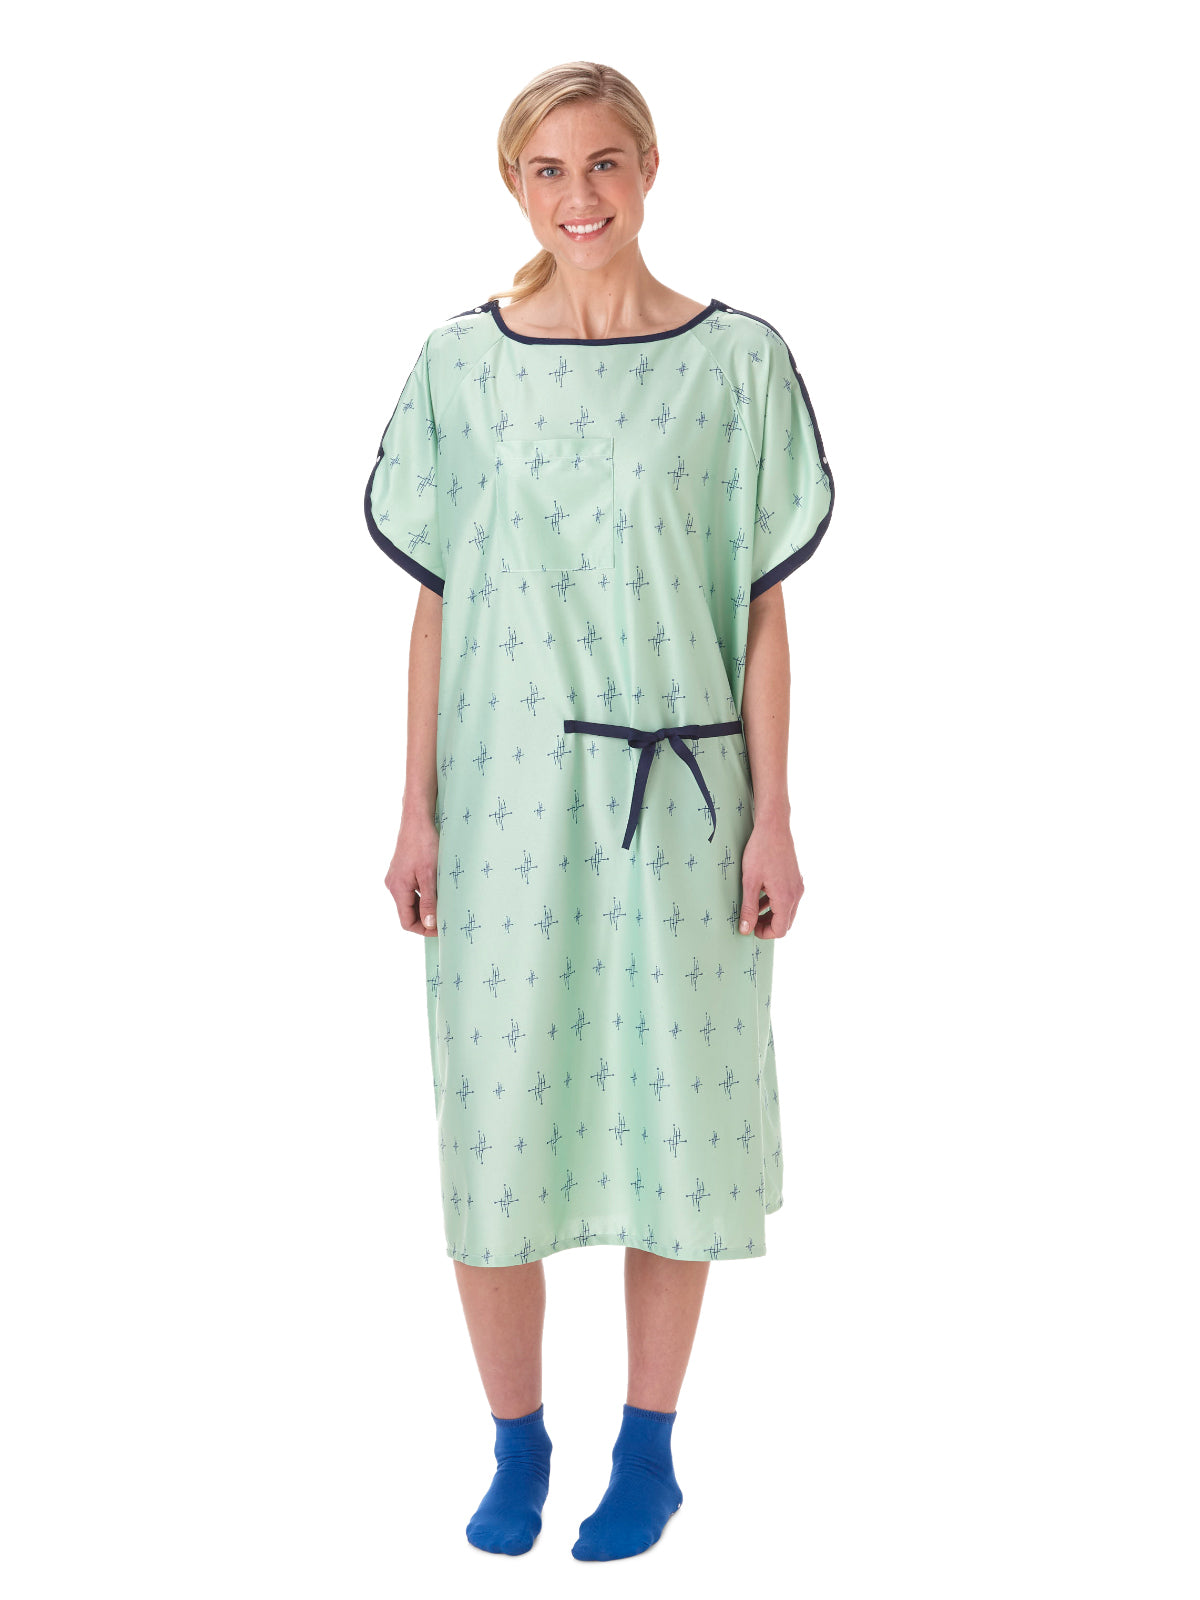 Unisex Patient Gown - 45326 - Crossings/Green